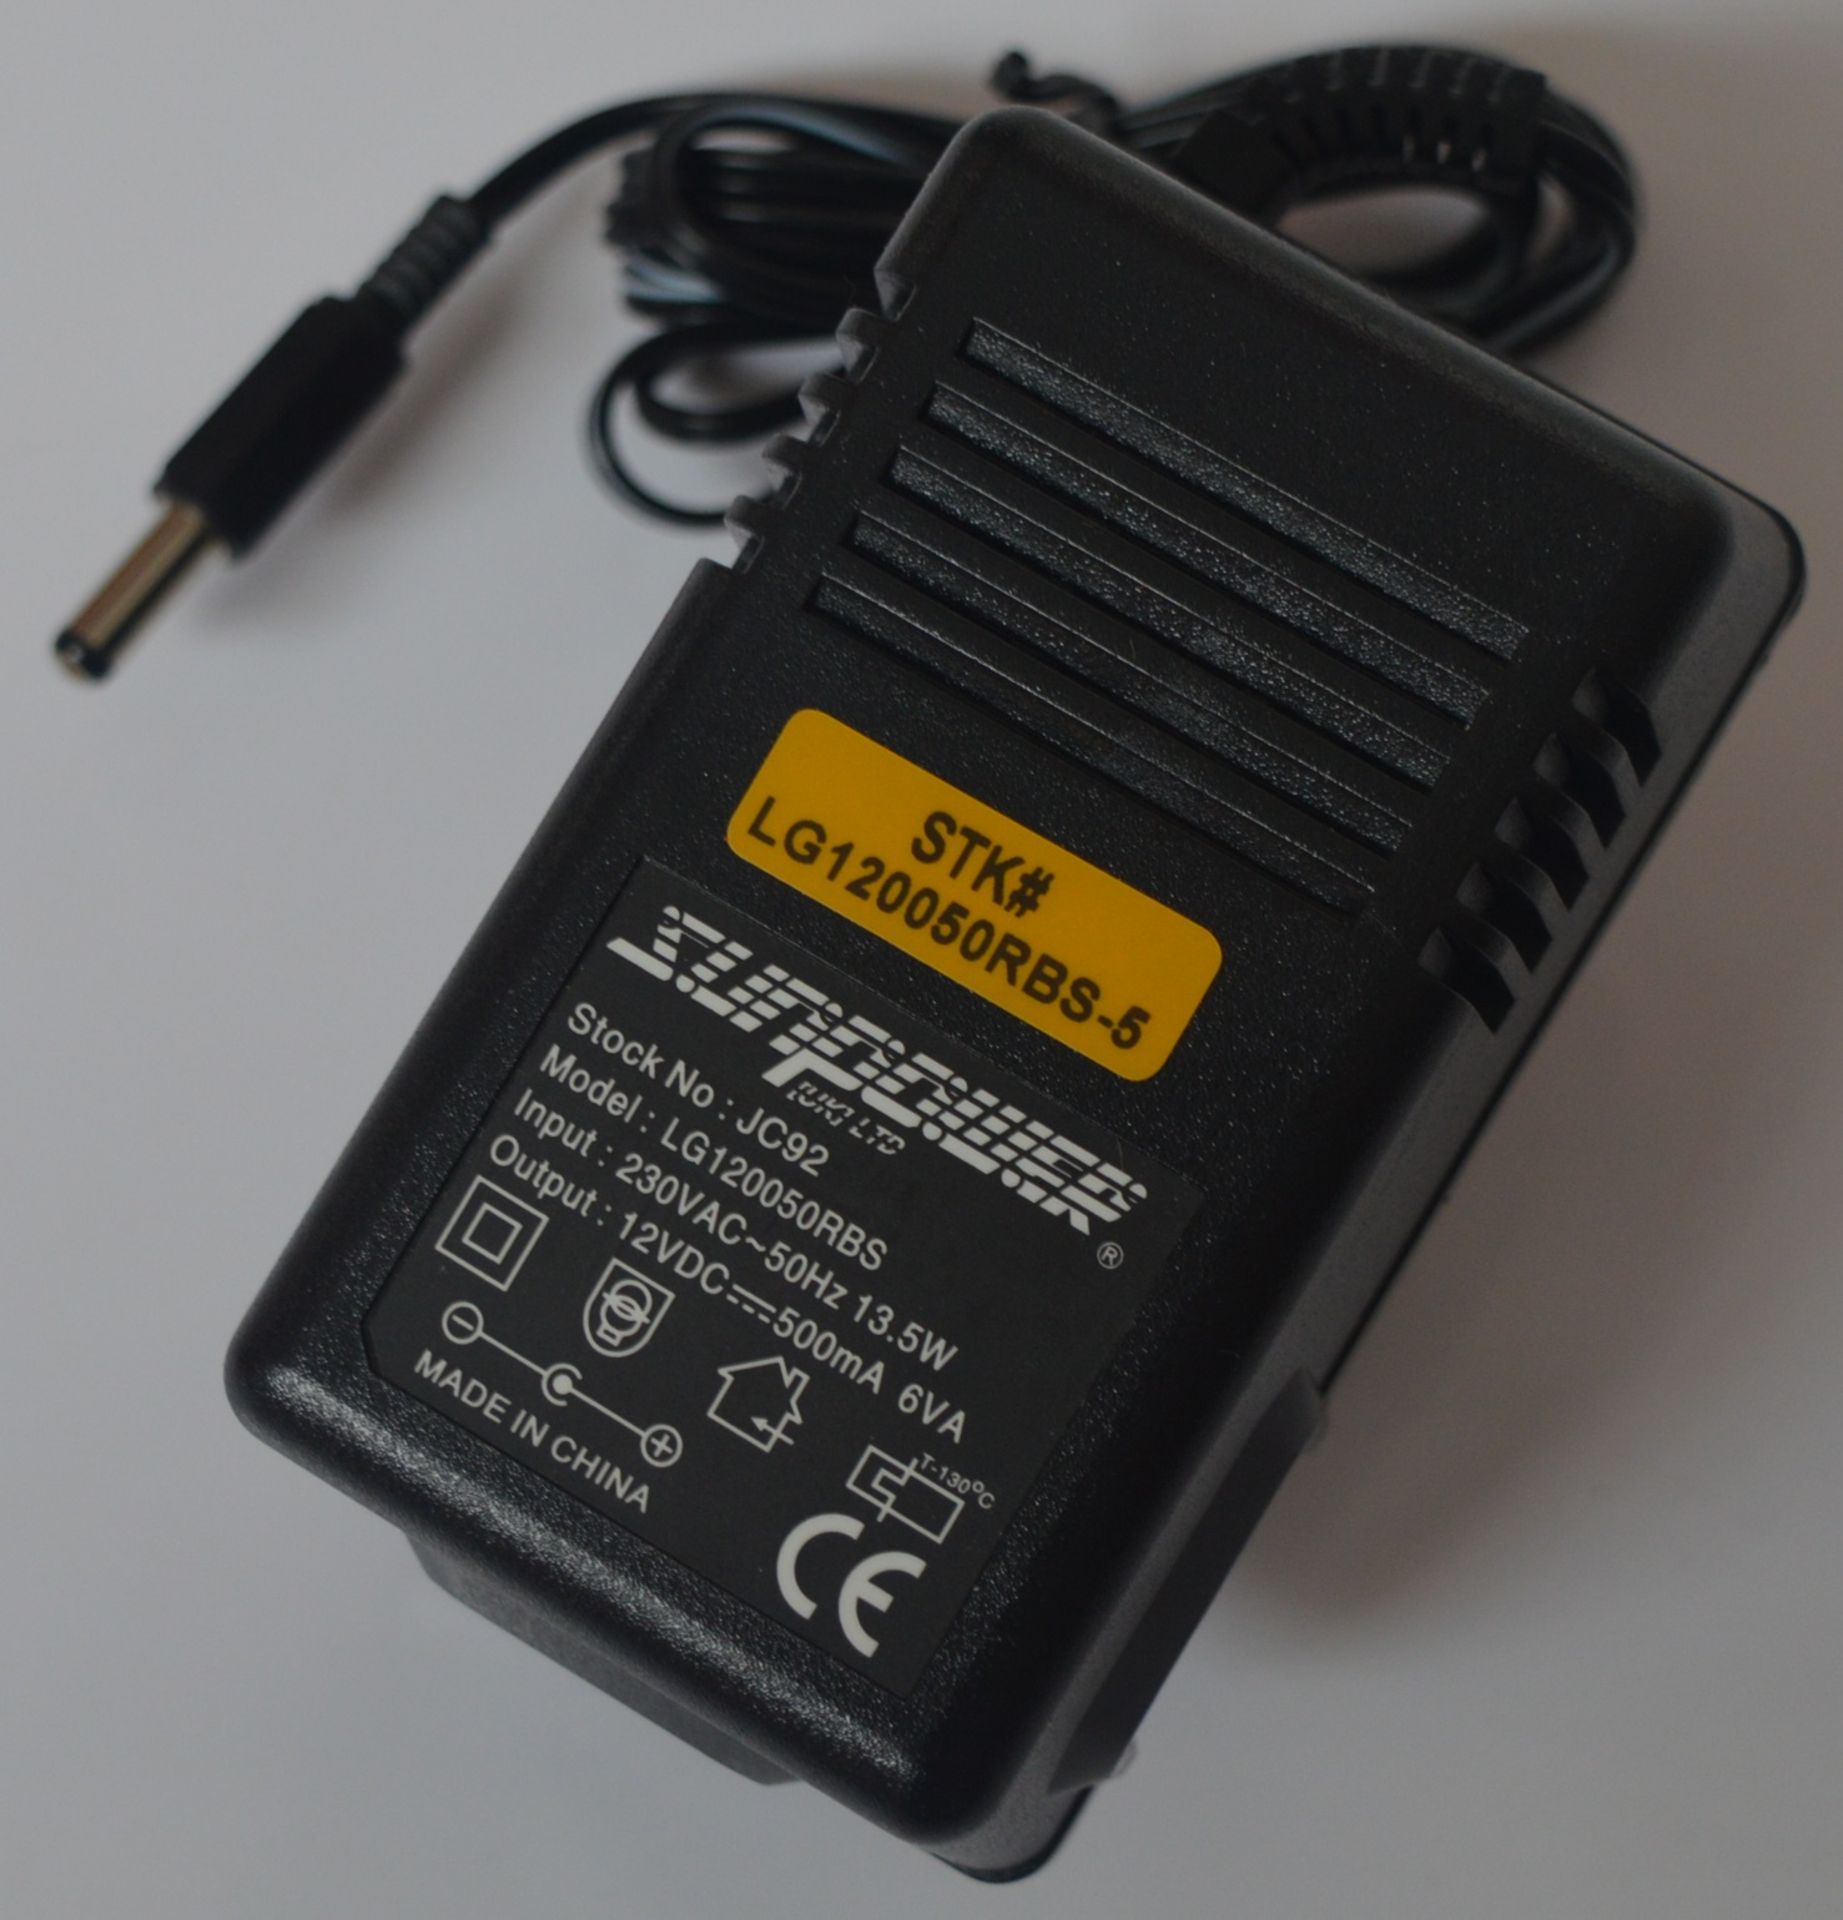 10 x Sunpower AC Power Adaptors - Input 230VAC-50Hz 13.5w - Output 12VDC 500mA 6VA - UK Plug - Model